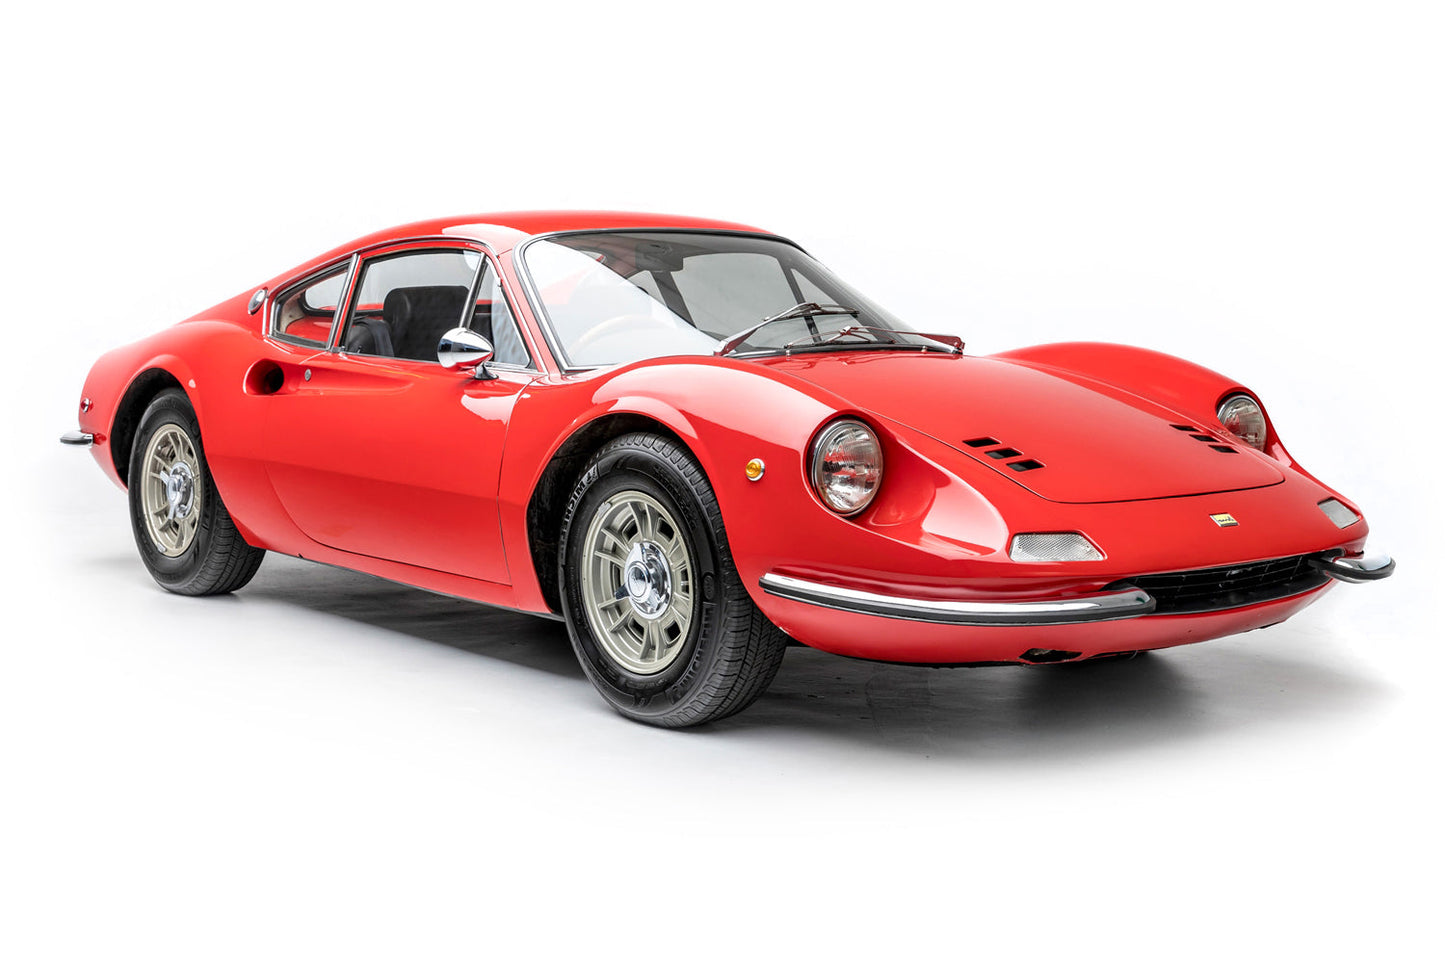 Ferrari 206 GT Dino - Stainless Steel Exhaust (1968-69) - QuickSilver Exhausts